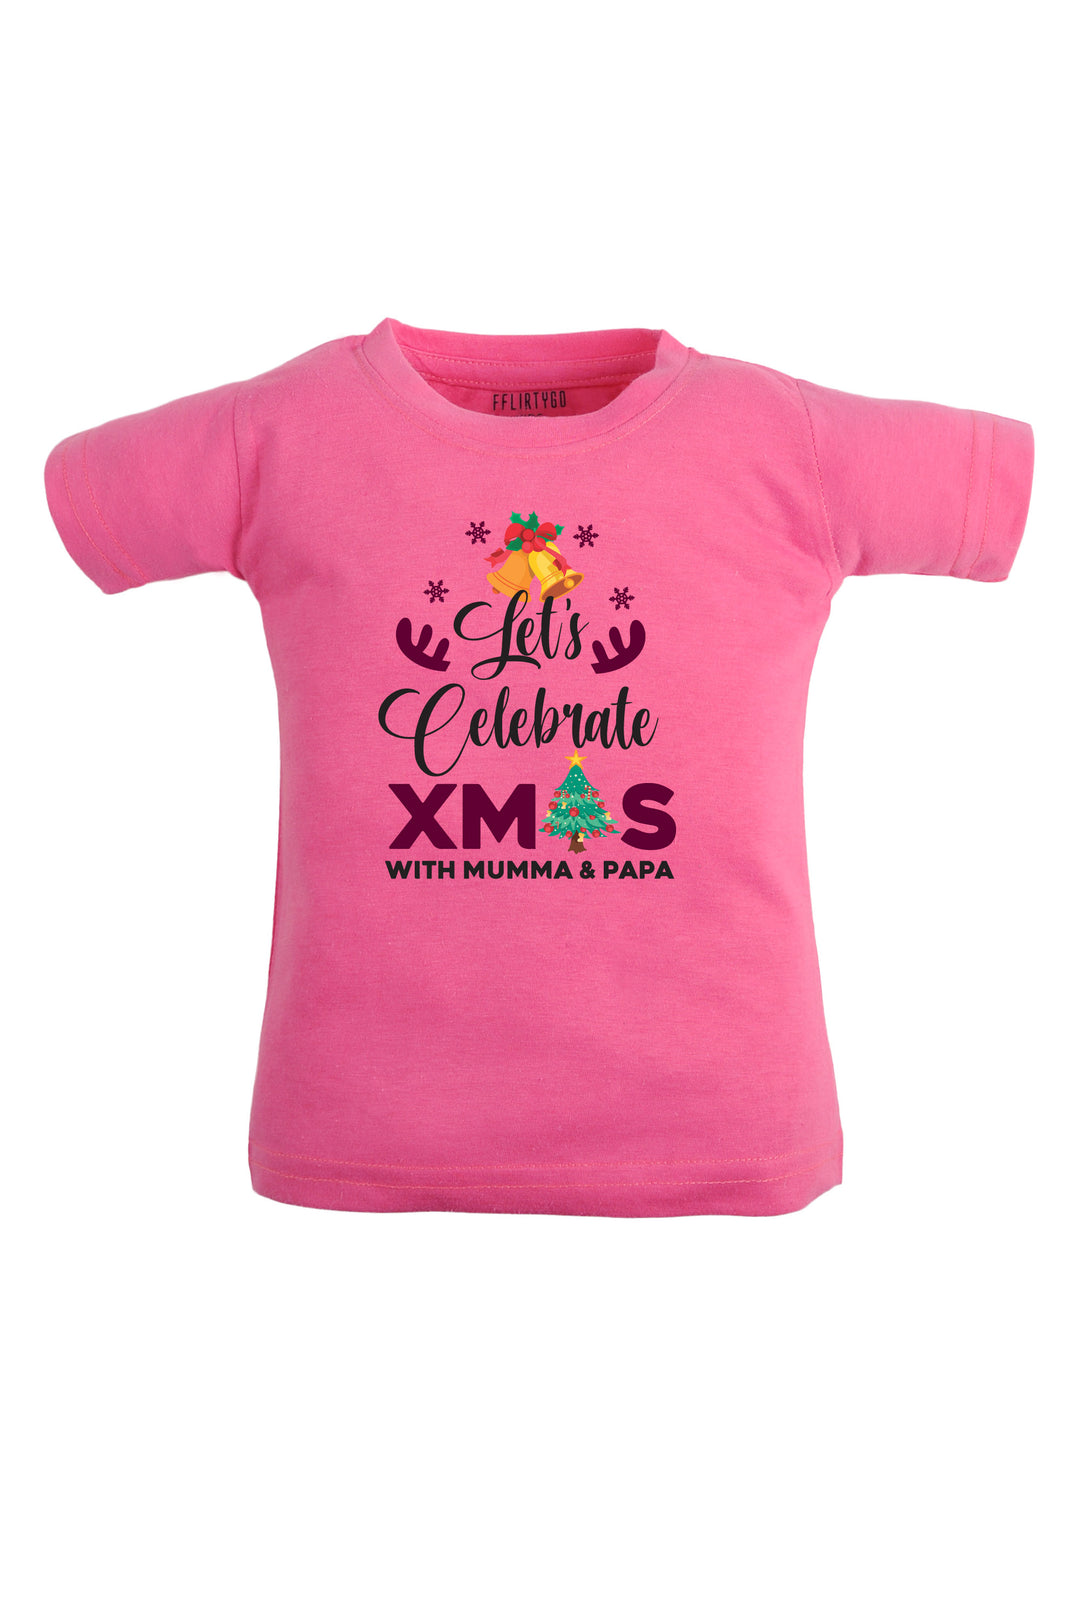 Let's Celebrate Xmas With Mumma & Papa Kids T Shirt